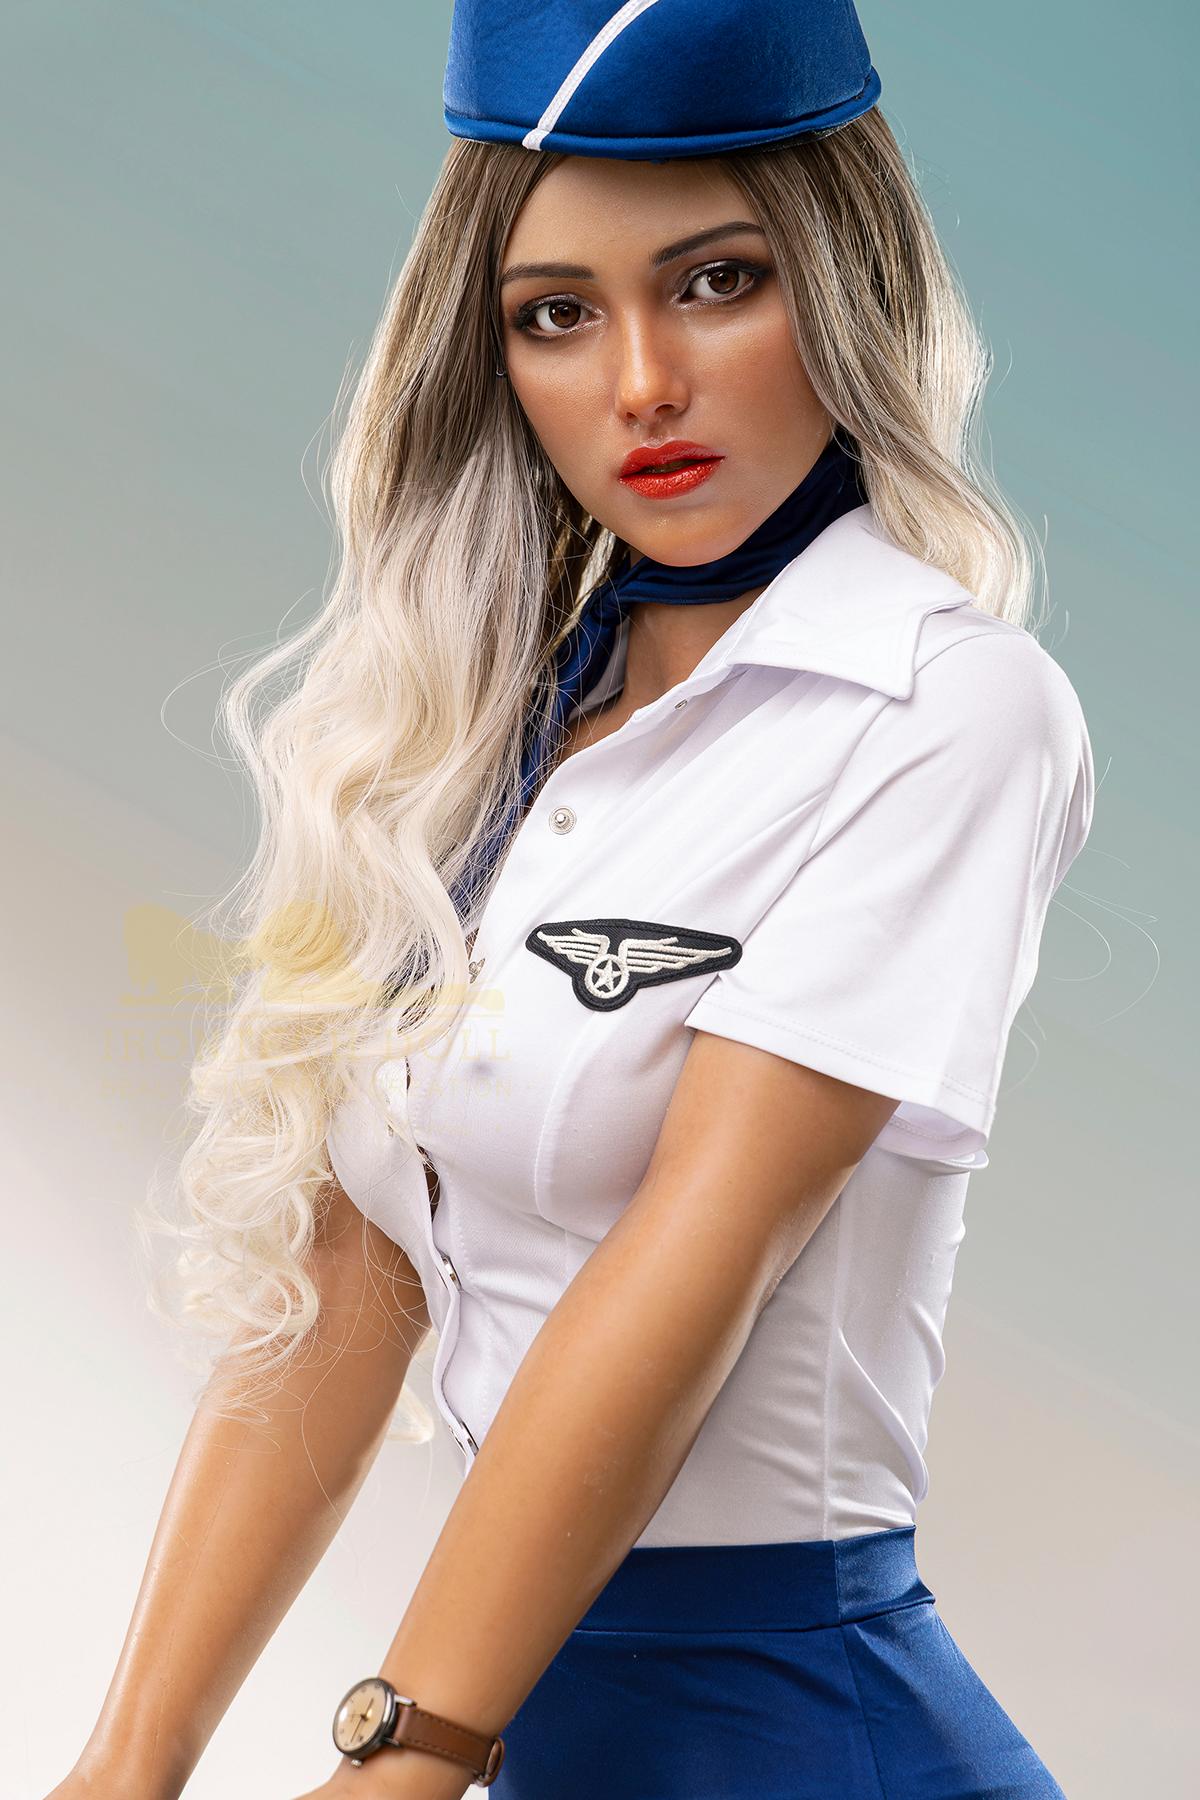 Silikon Sexpuppe Chloé | Sexy blonde Stewardess Sexdoll